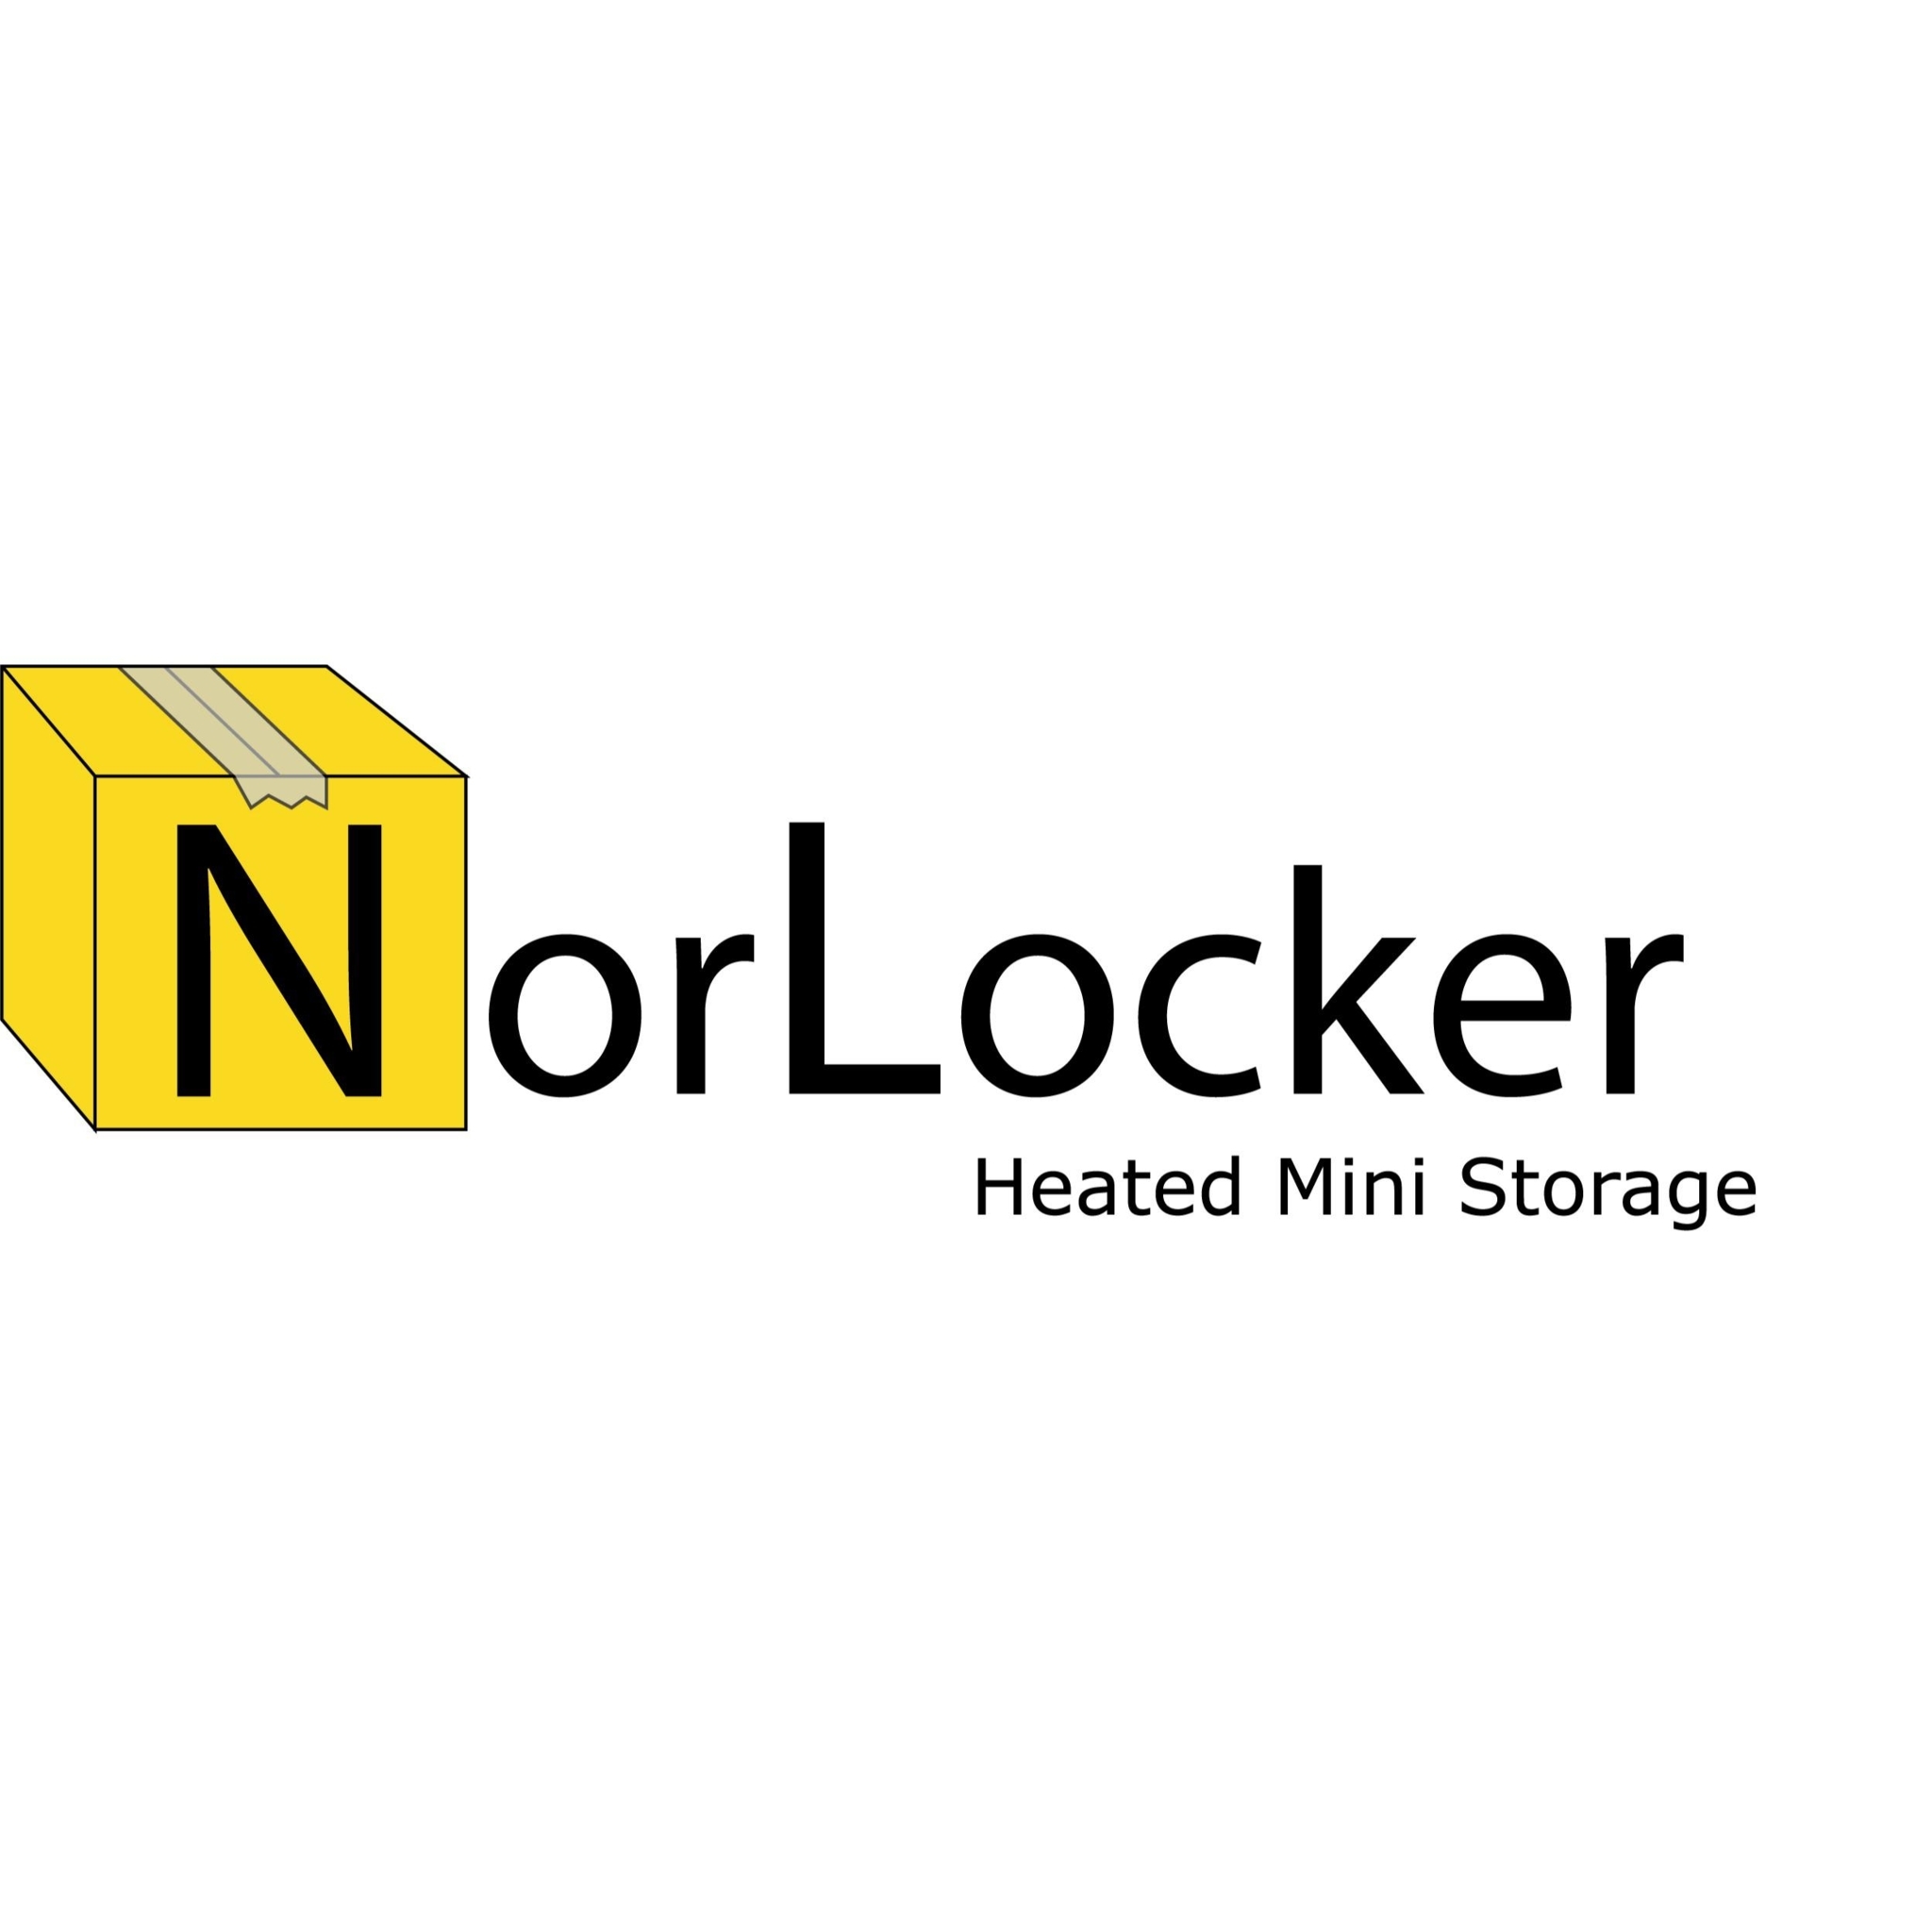 NorLocker Heated Mini Storage Ltd. - Mini entreposage